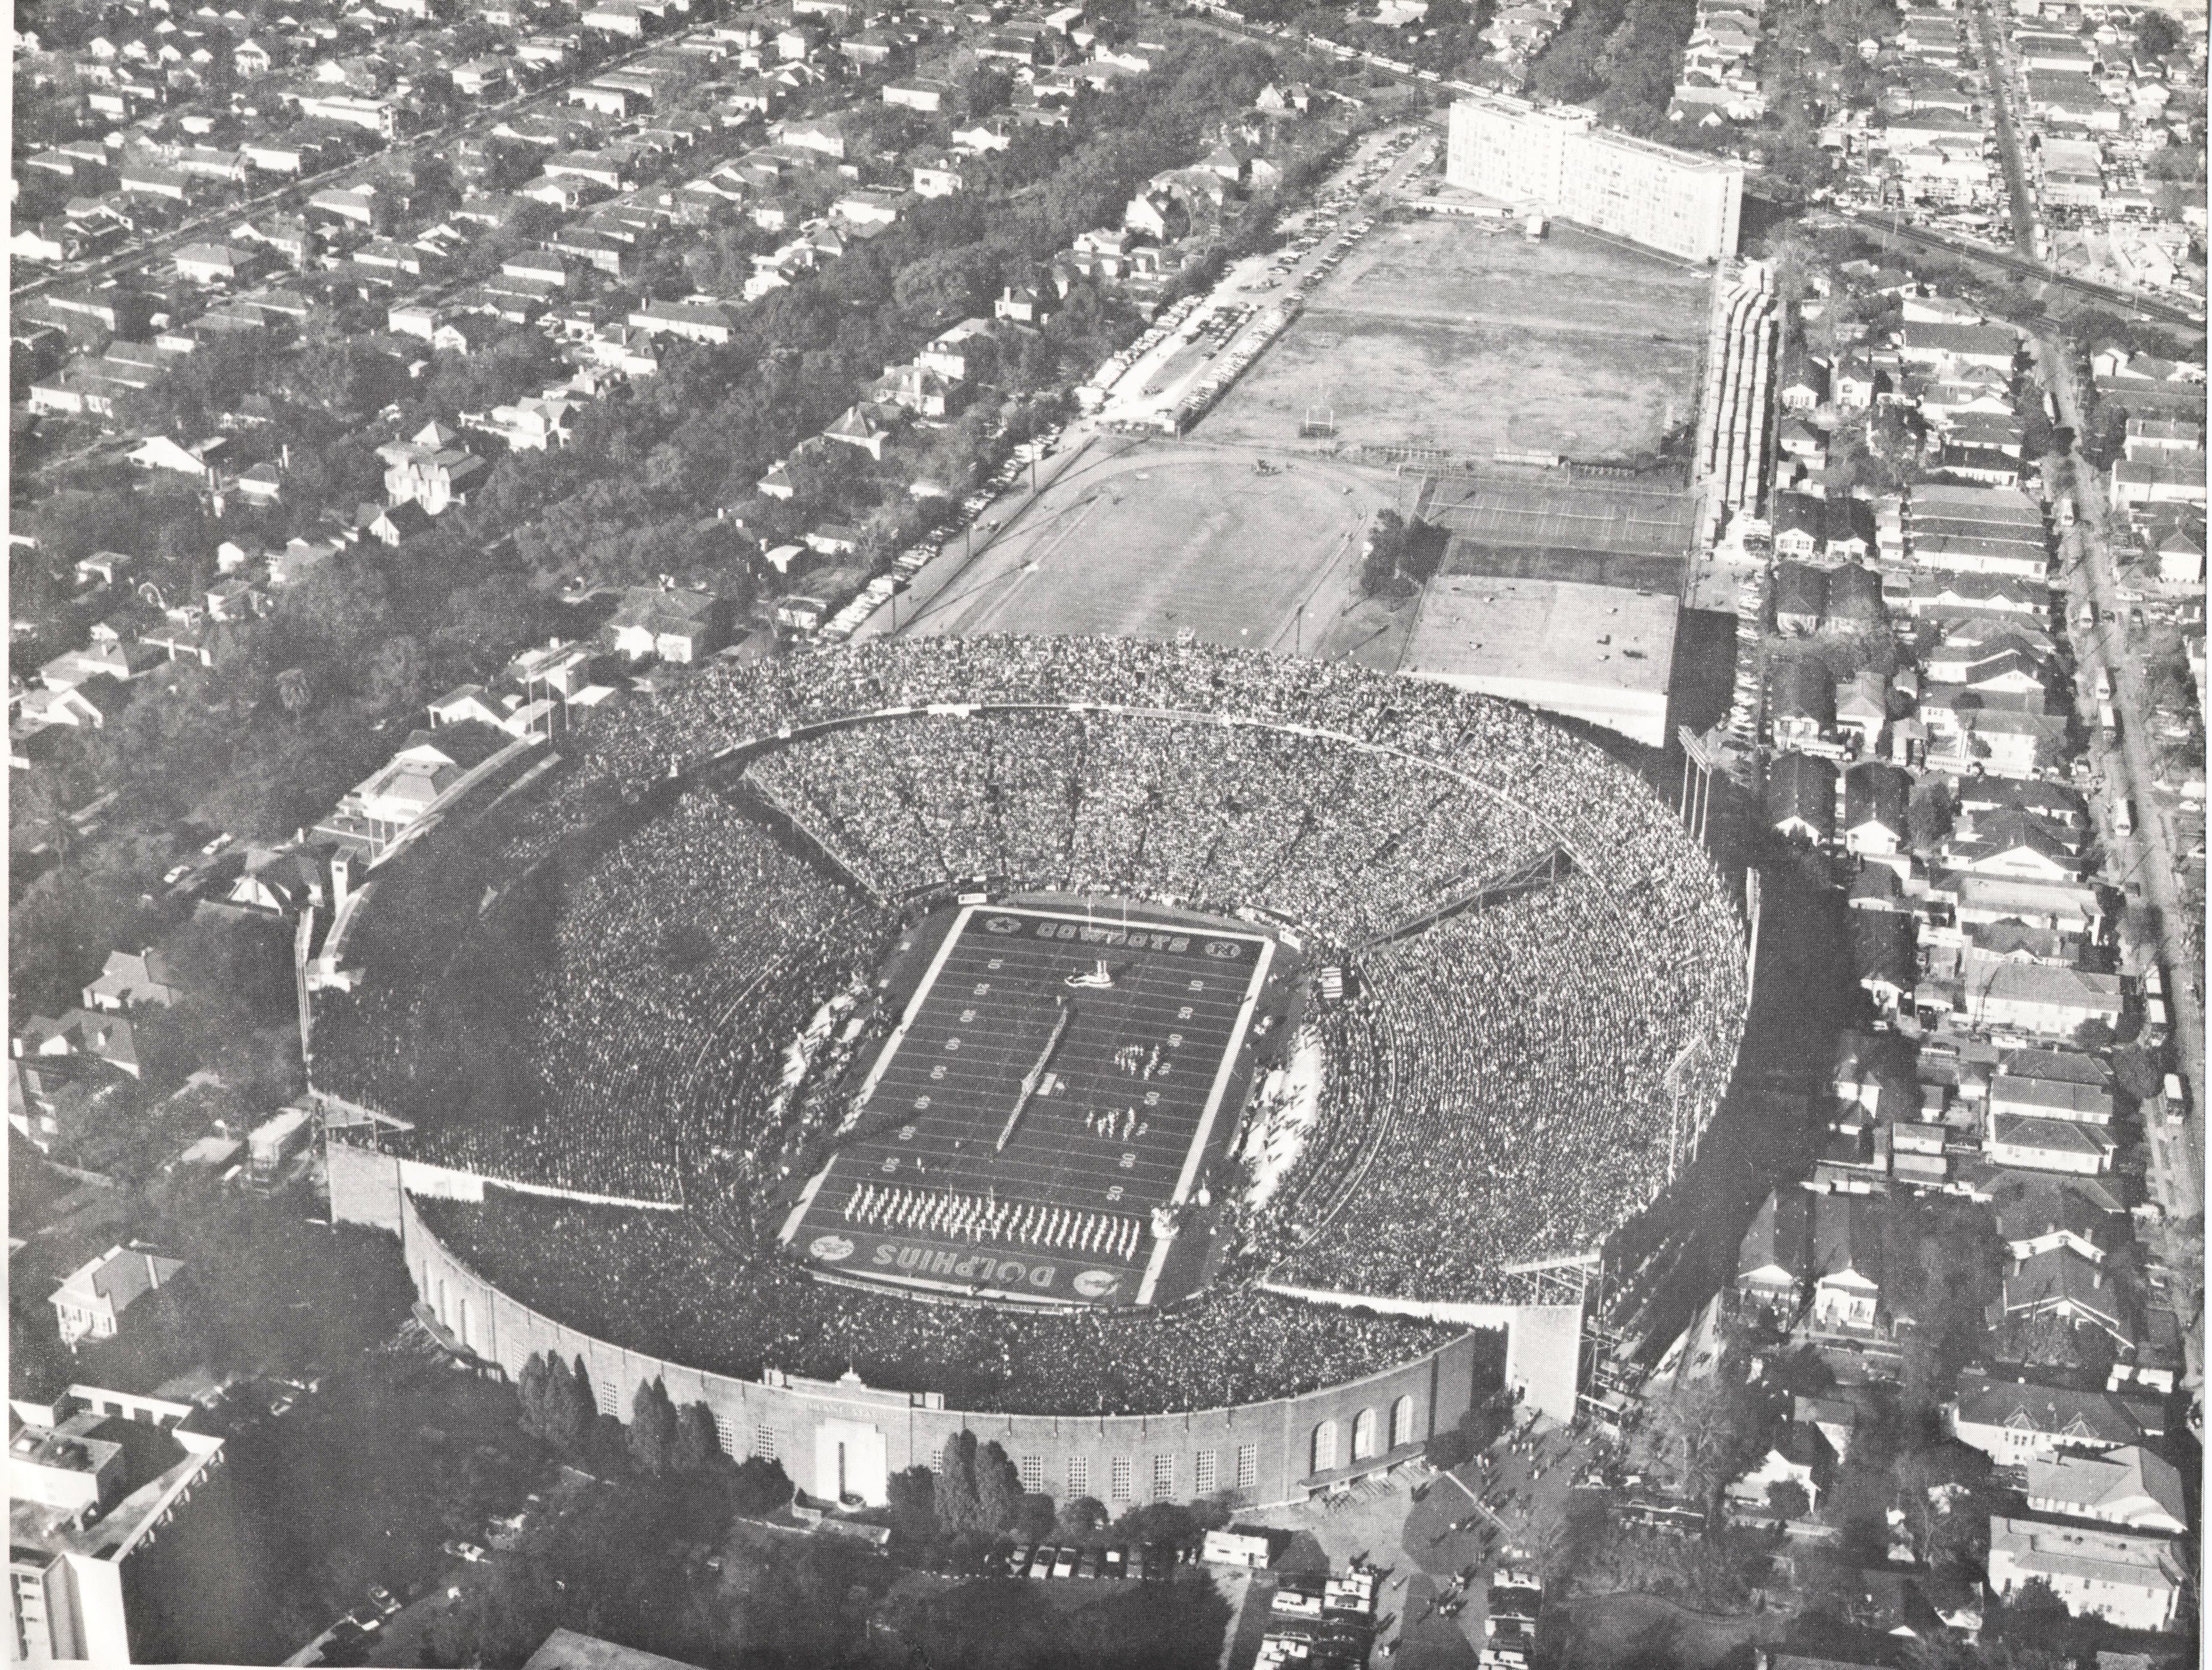 Tulane Stadium: A relic of Super Bowl history